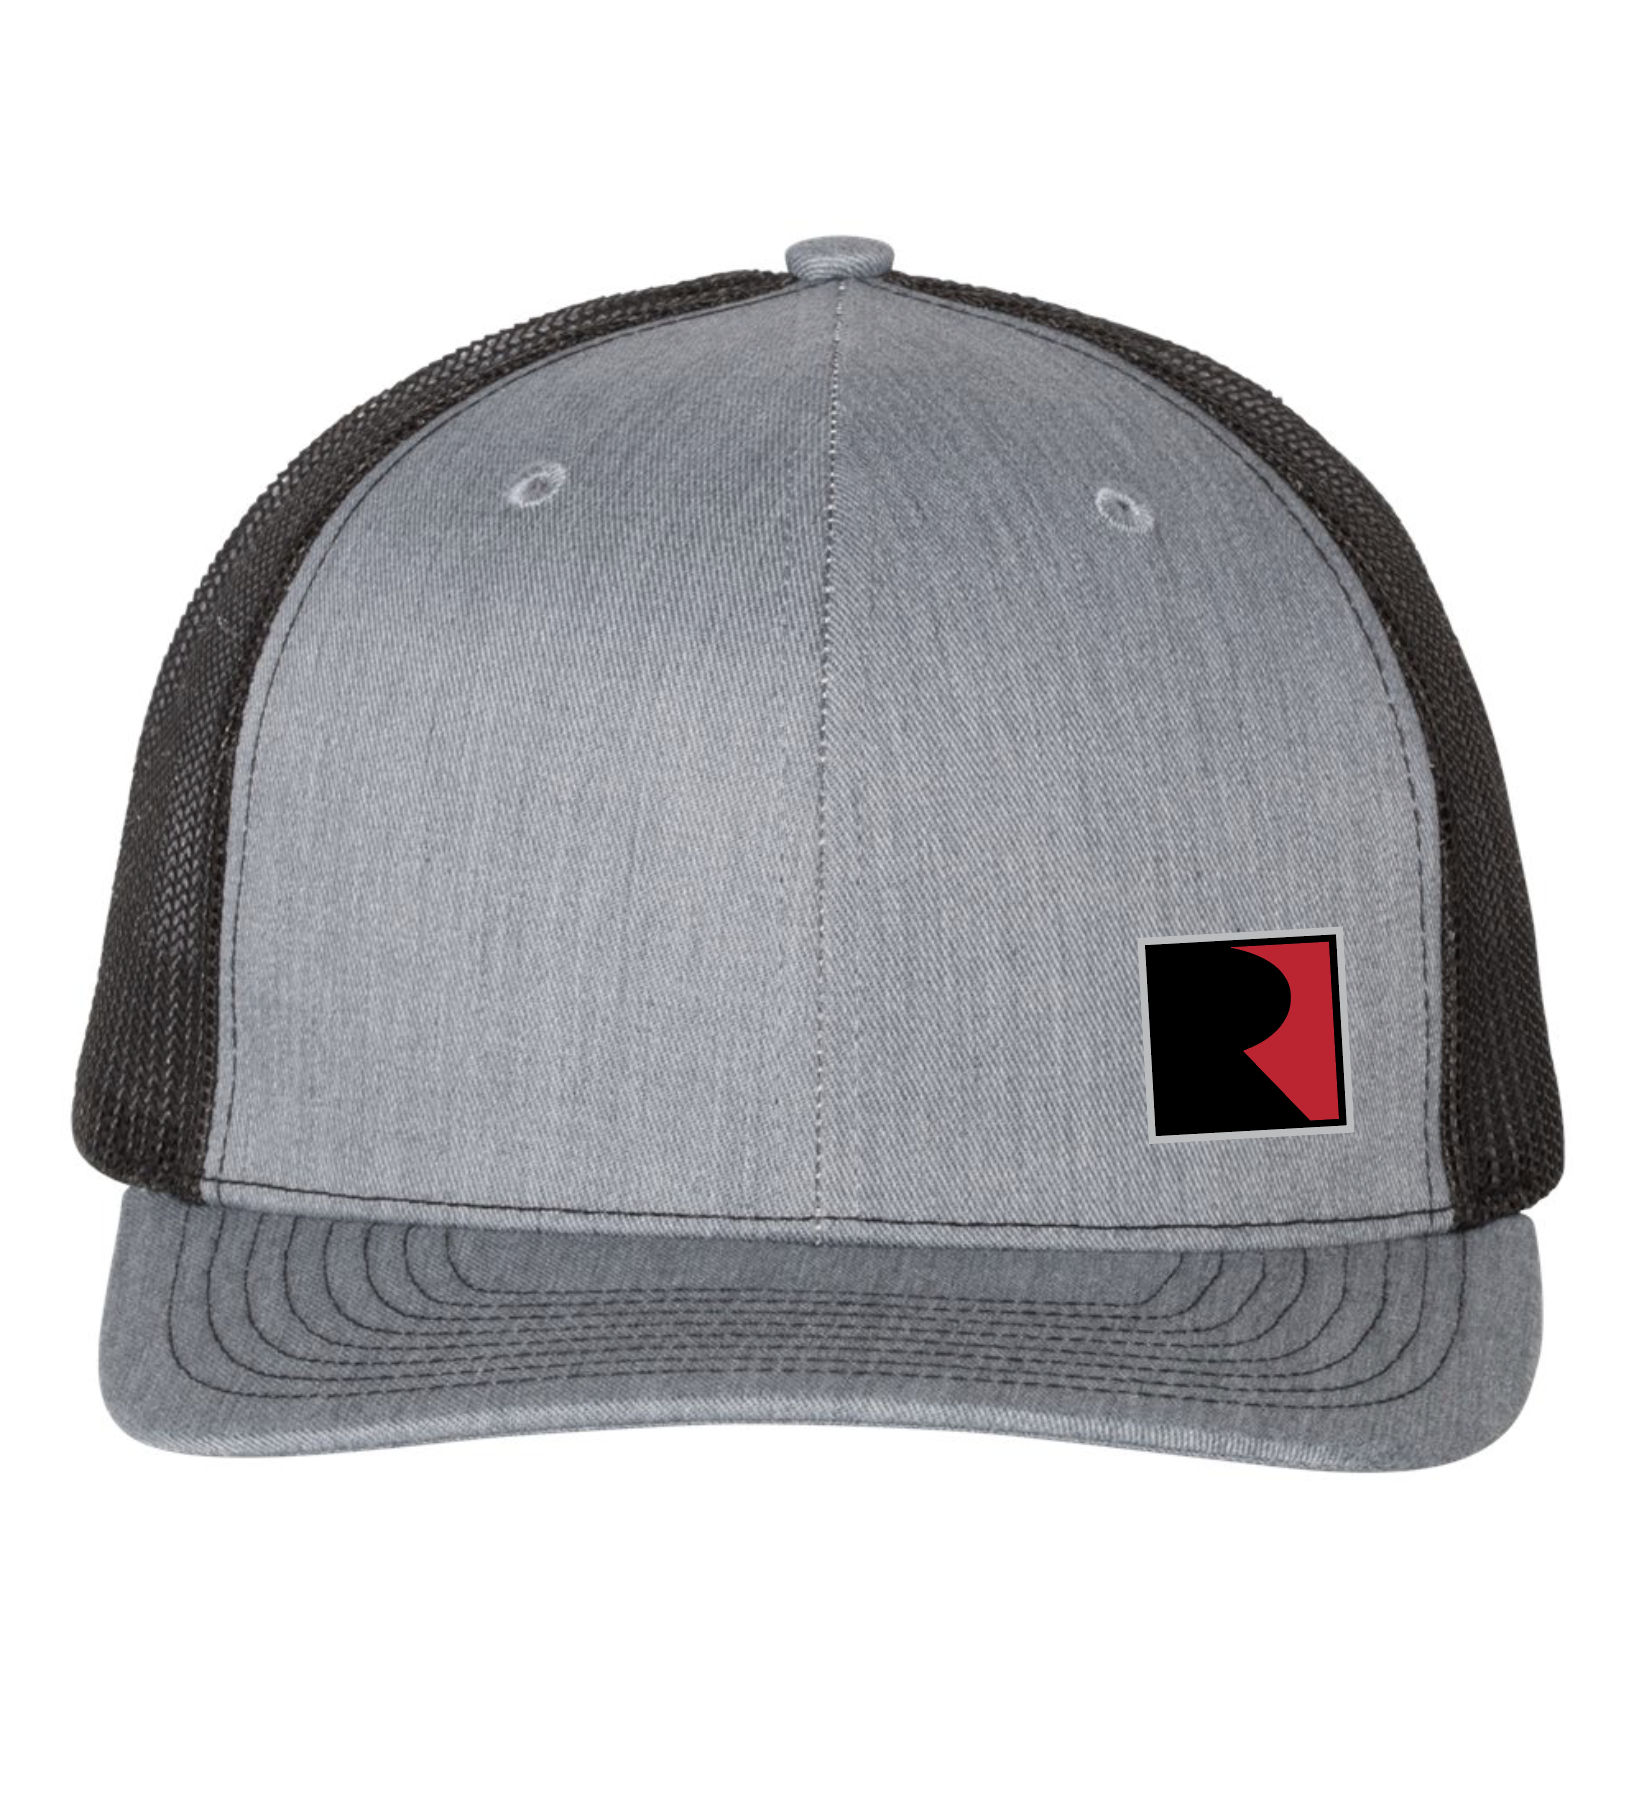 Roush Performance Grey R Hat